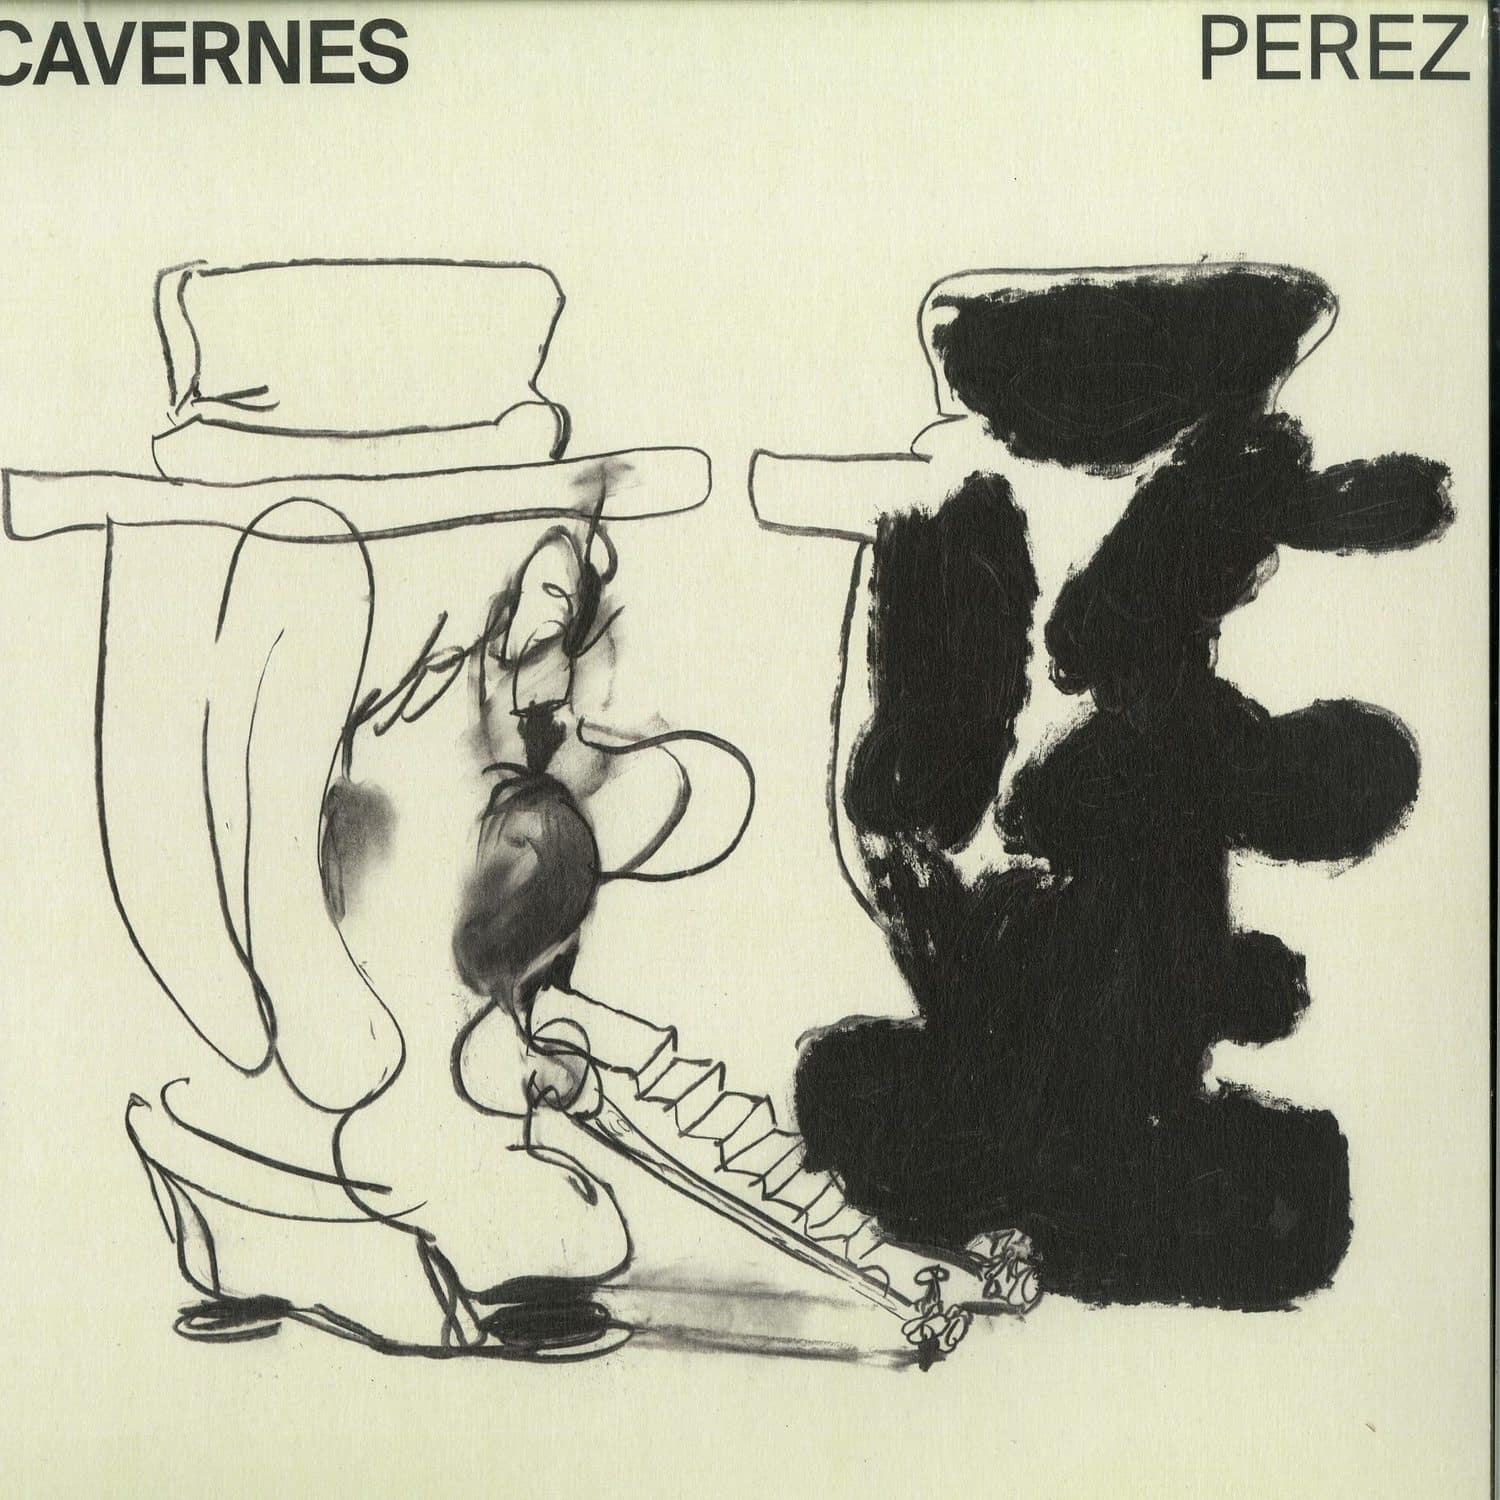 Perez - CAVERNES 